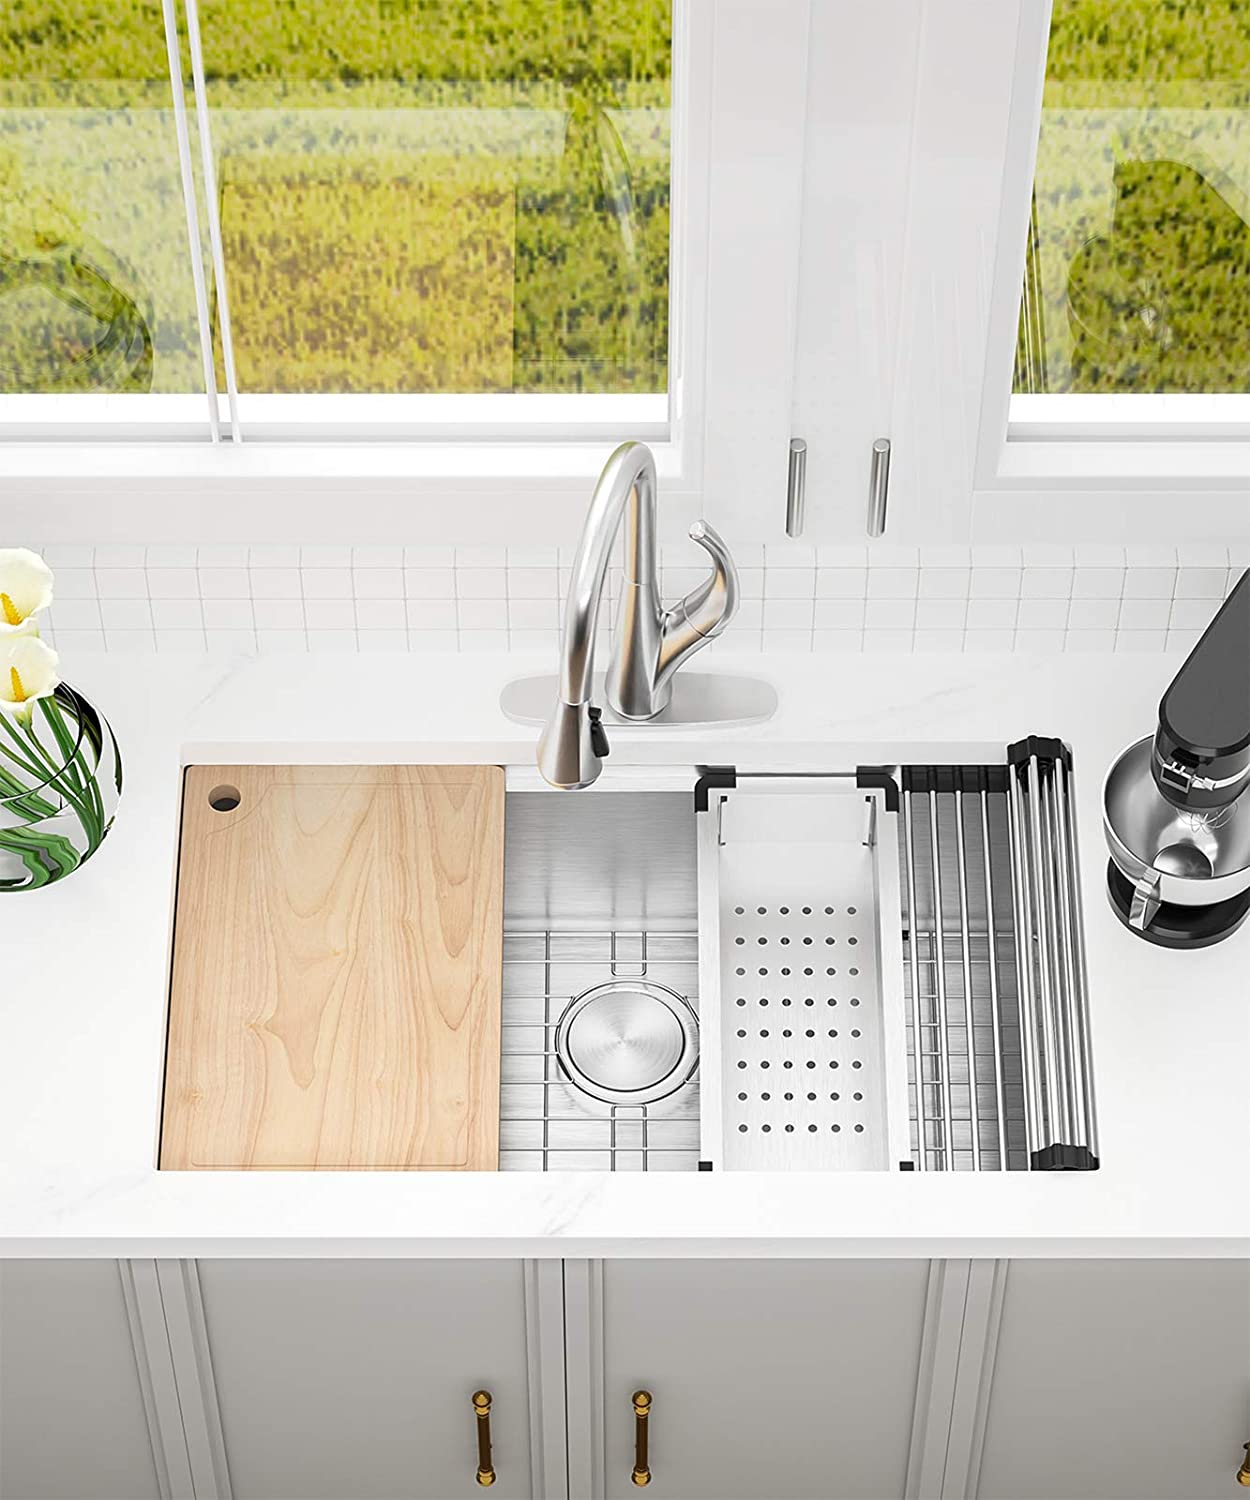 1 Combo deal - Kitchen workstation sink and sensor faucet